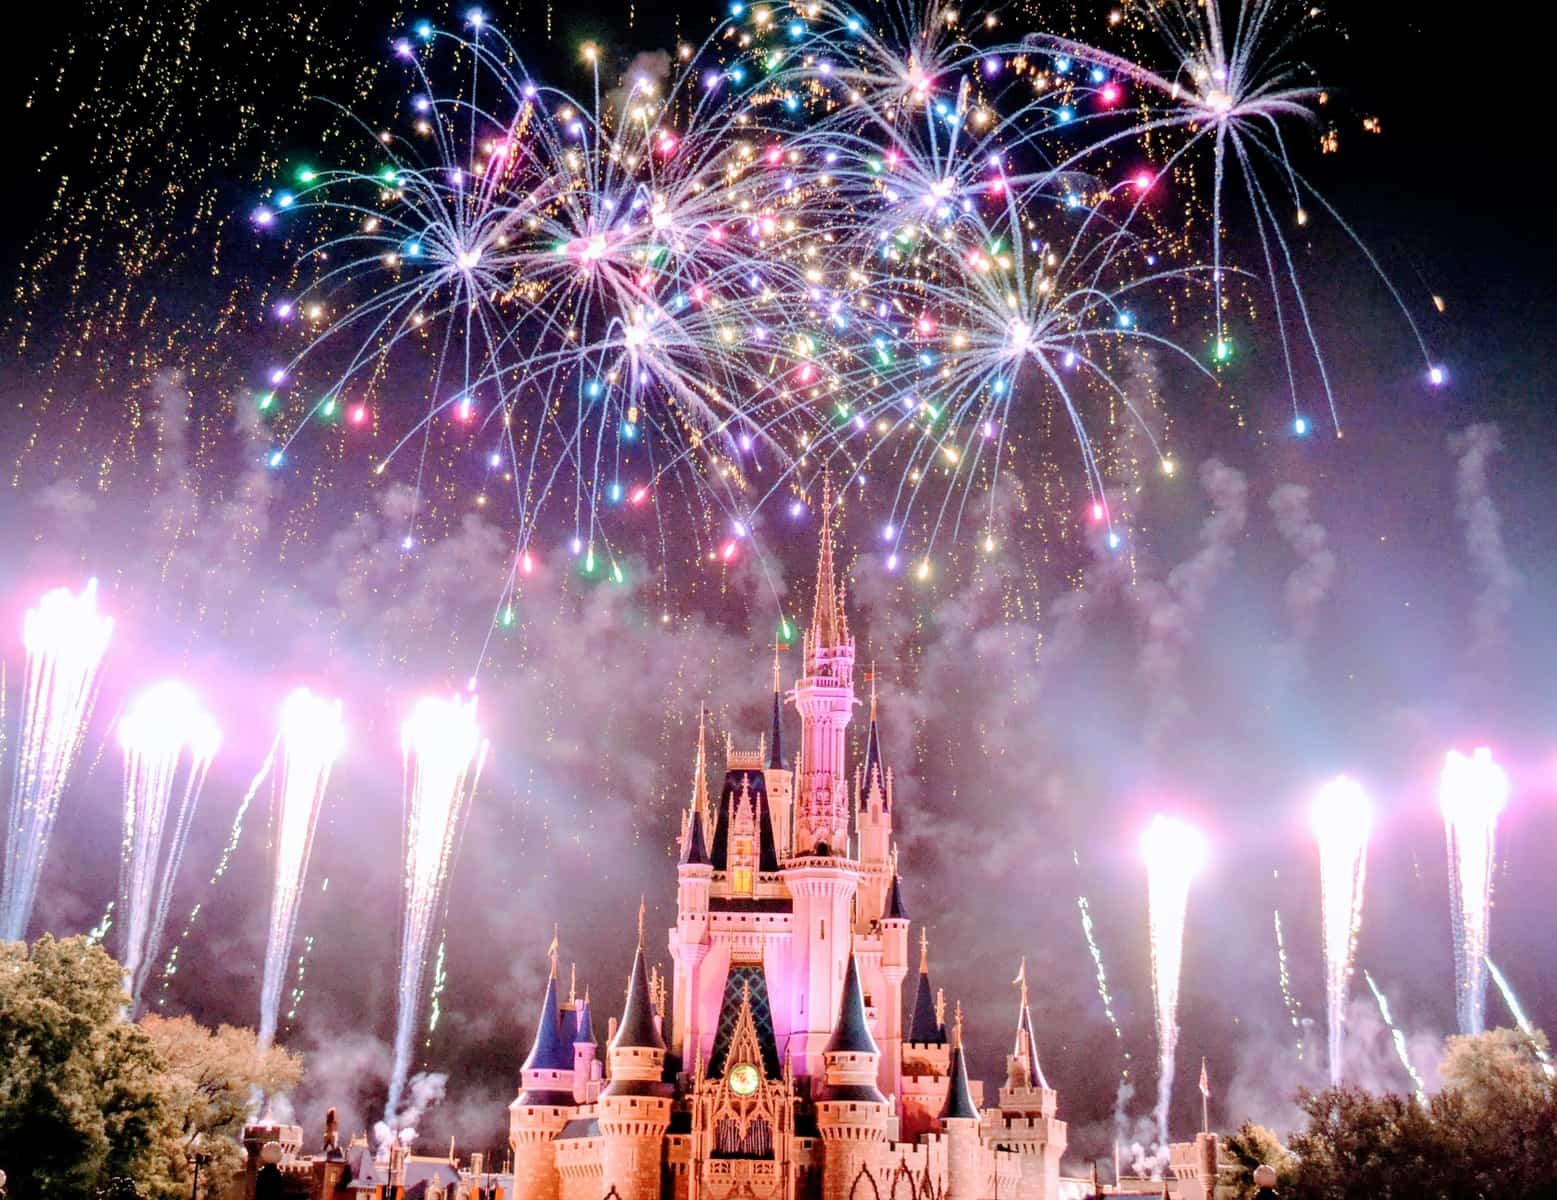 Best restaurants at Disney World for fireworks viewing